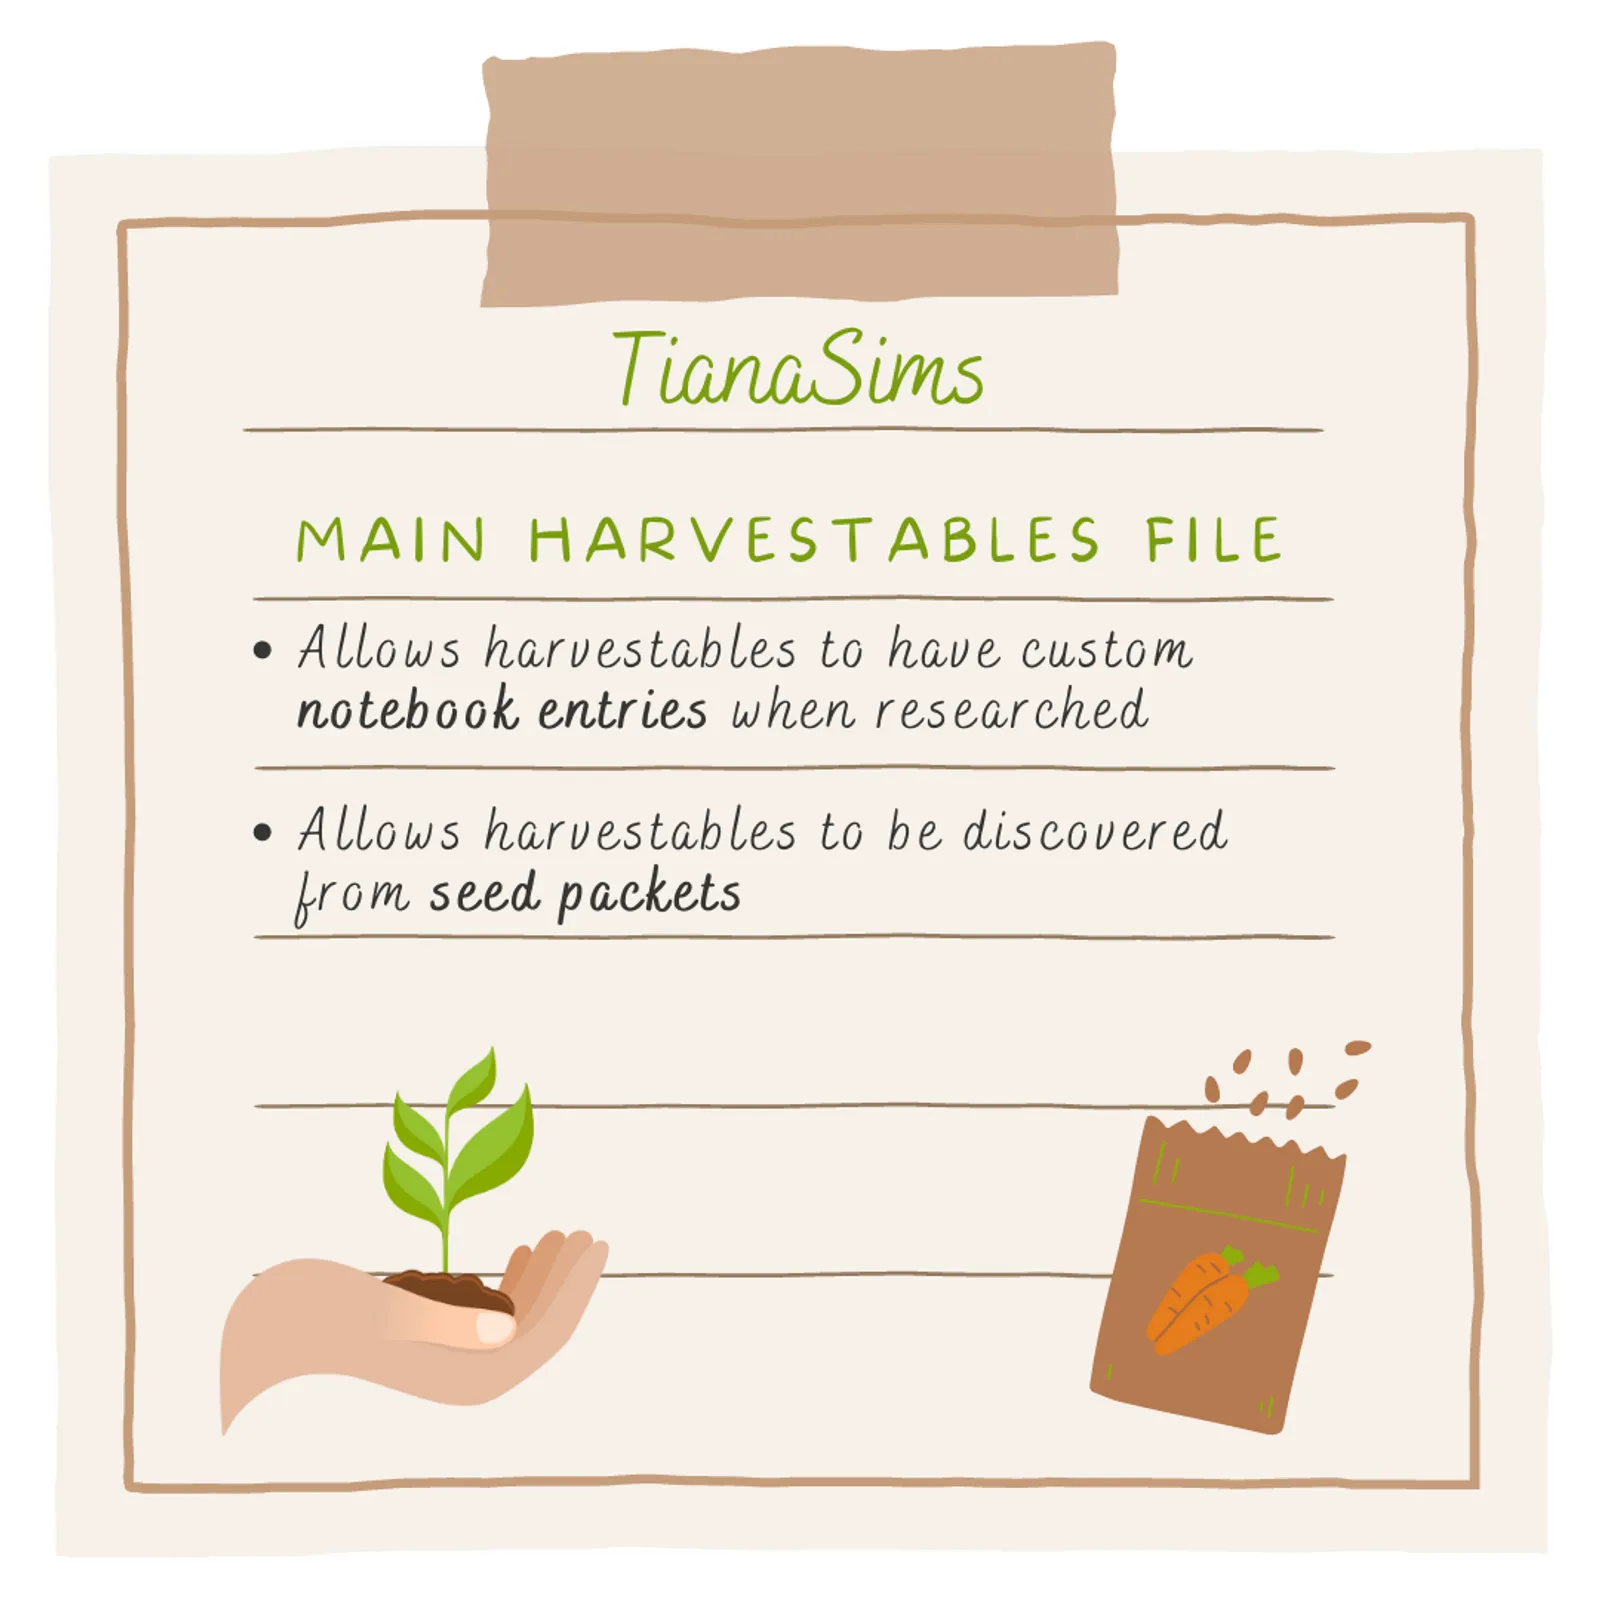 Harvestables - main file